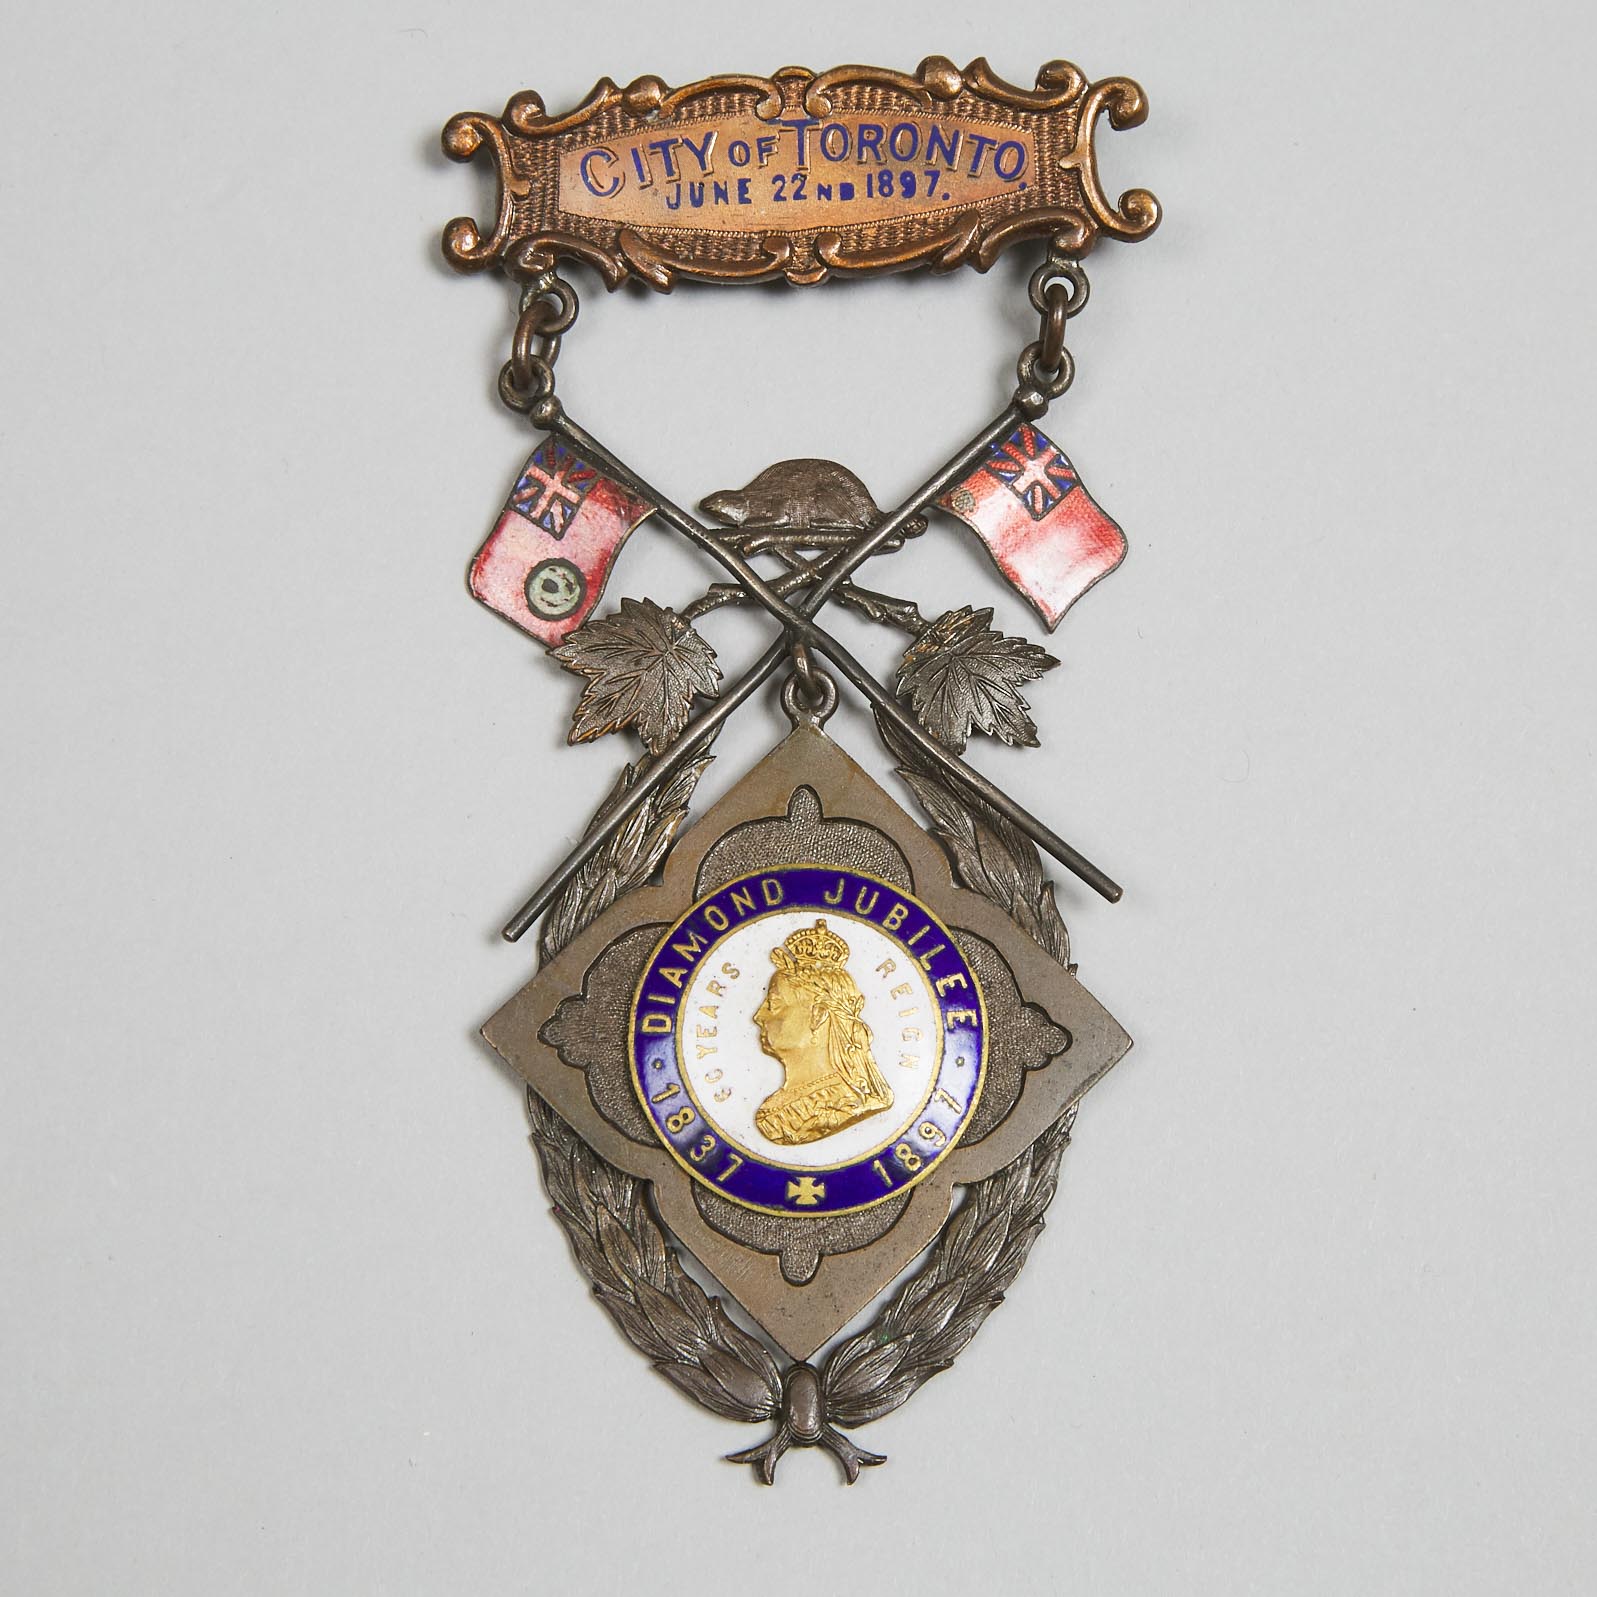 City of Toronto Queen Victoria Diamond Jubilee Commemorative Enamelled Copper Medal, 1897